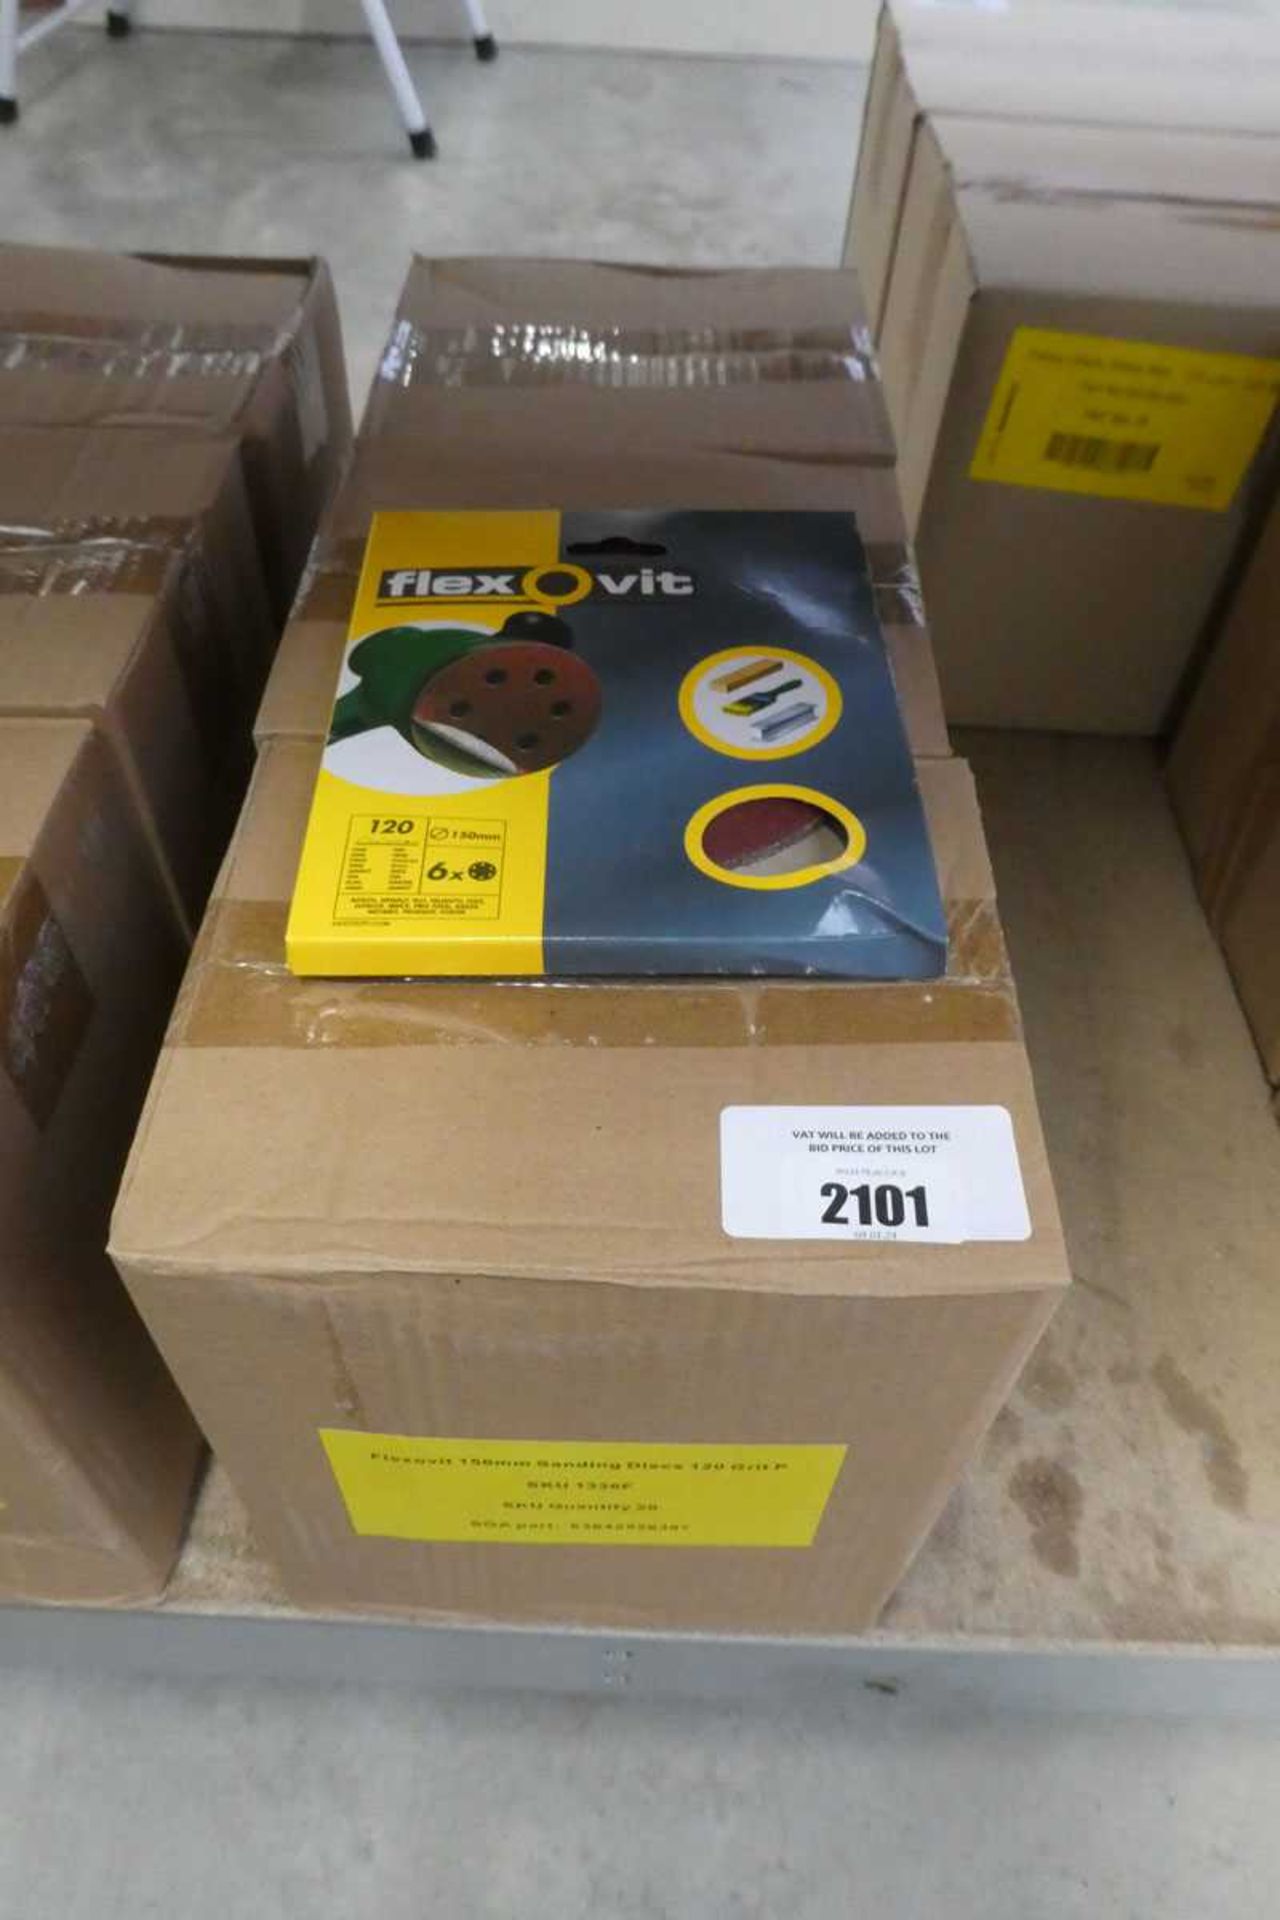 +VAT 3 boxes containing 20 packs each of Flexovit 6 piece sets of 120 grit orbital sanding discs